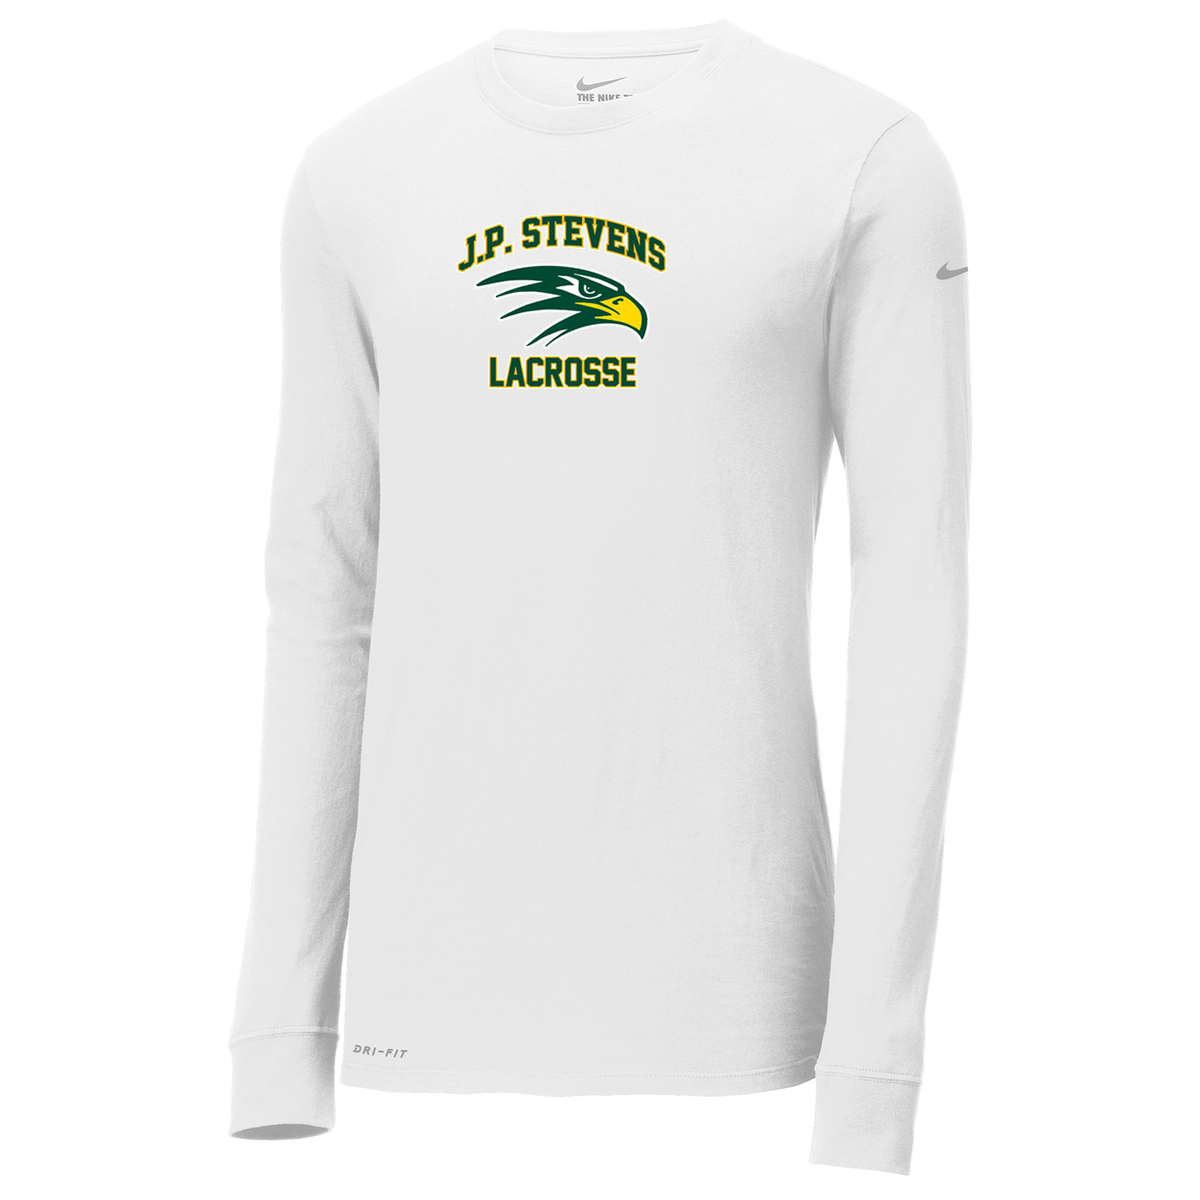 J.P. Stevens Lacrosse Nike Dri-FIT Long Sleeve Tee